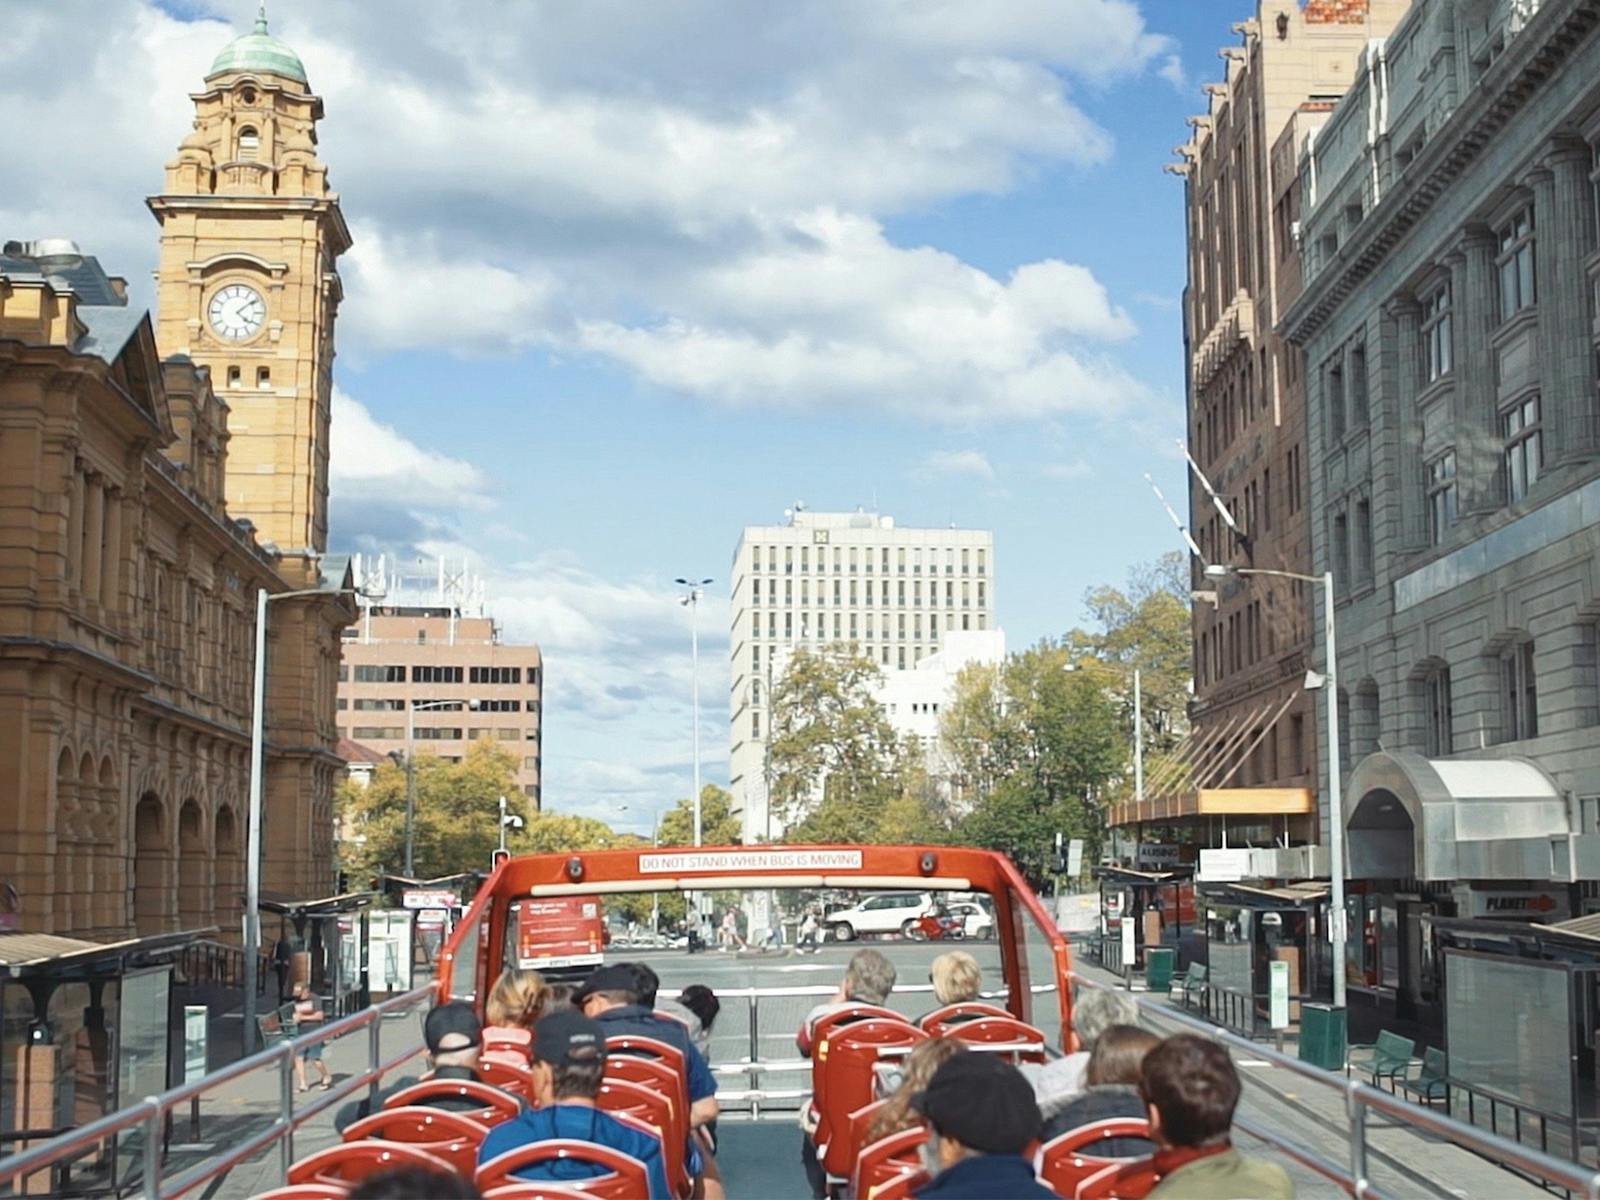 Passengers sitting on open-top double decker bus while it drives past city buildings.